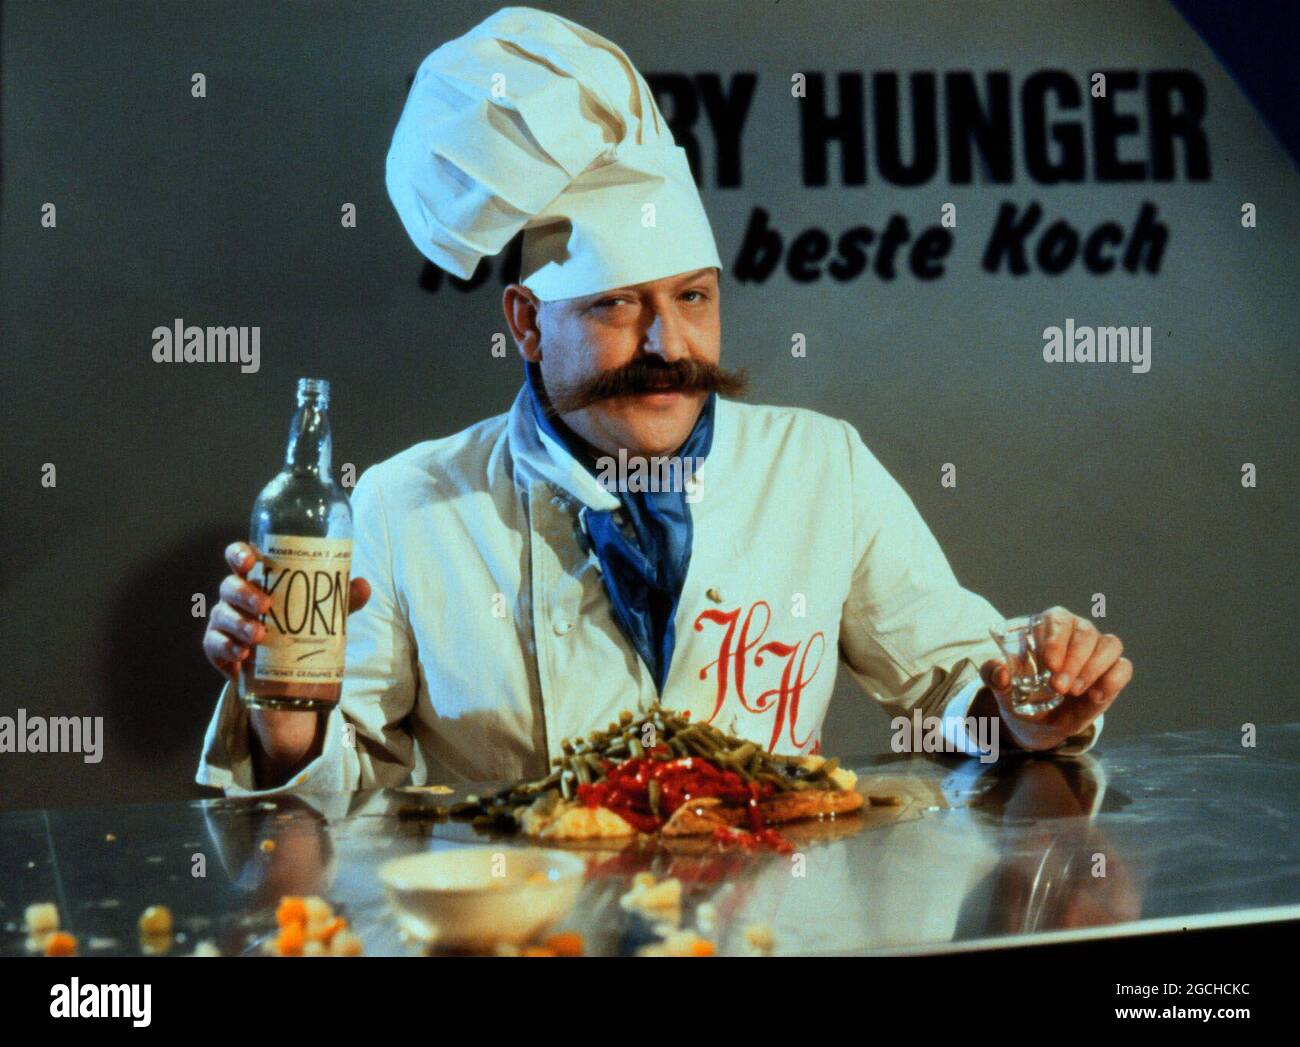 Voll daneben, ARD TV Comedy, 1990, Diether Krebs in dem Sketch: Chefkoch Harry Hunger. Voll daneben, ARD TV Comedy, 1990, Diether Krebs como Chef Harry Hunger. Foto de stock